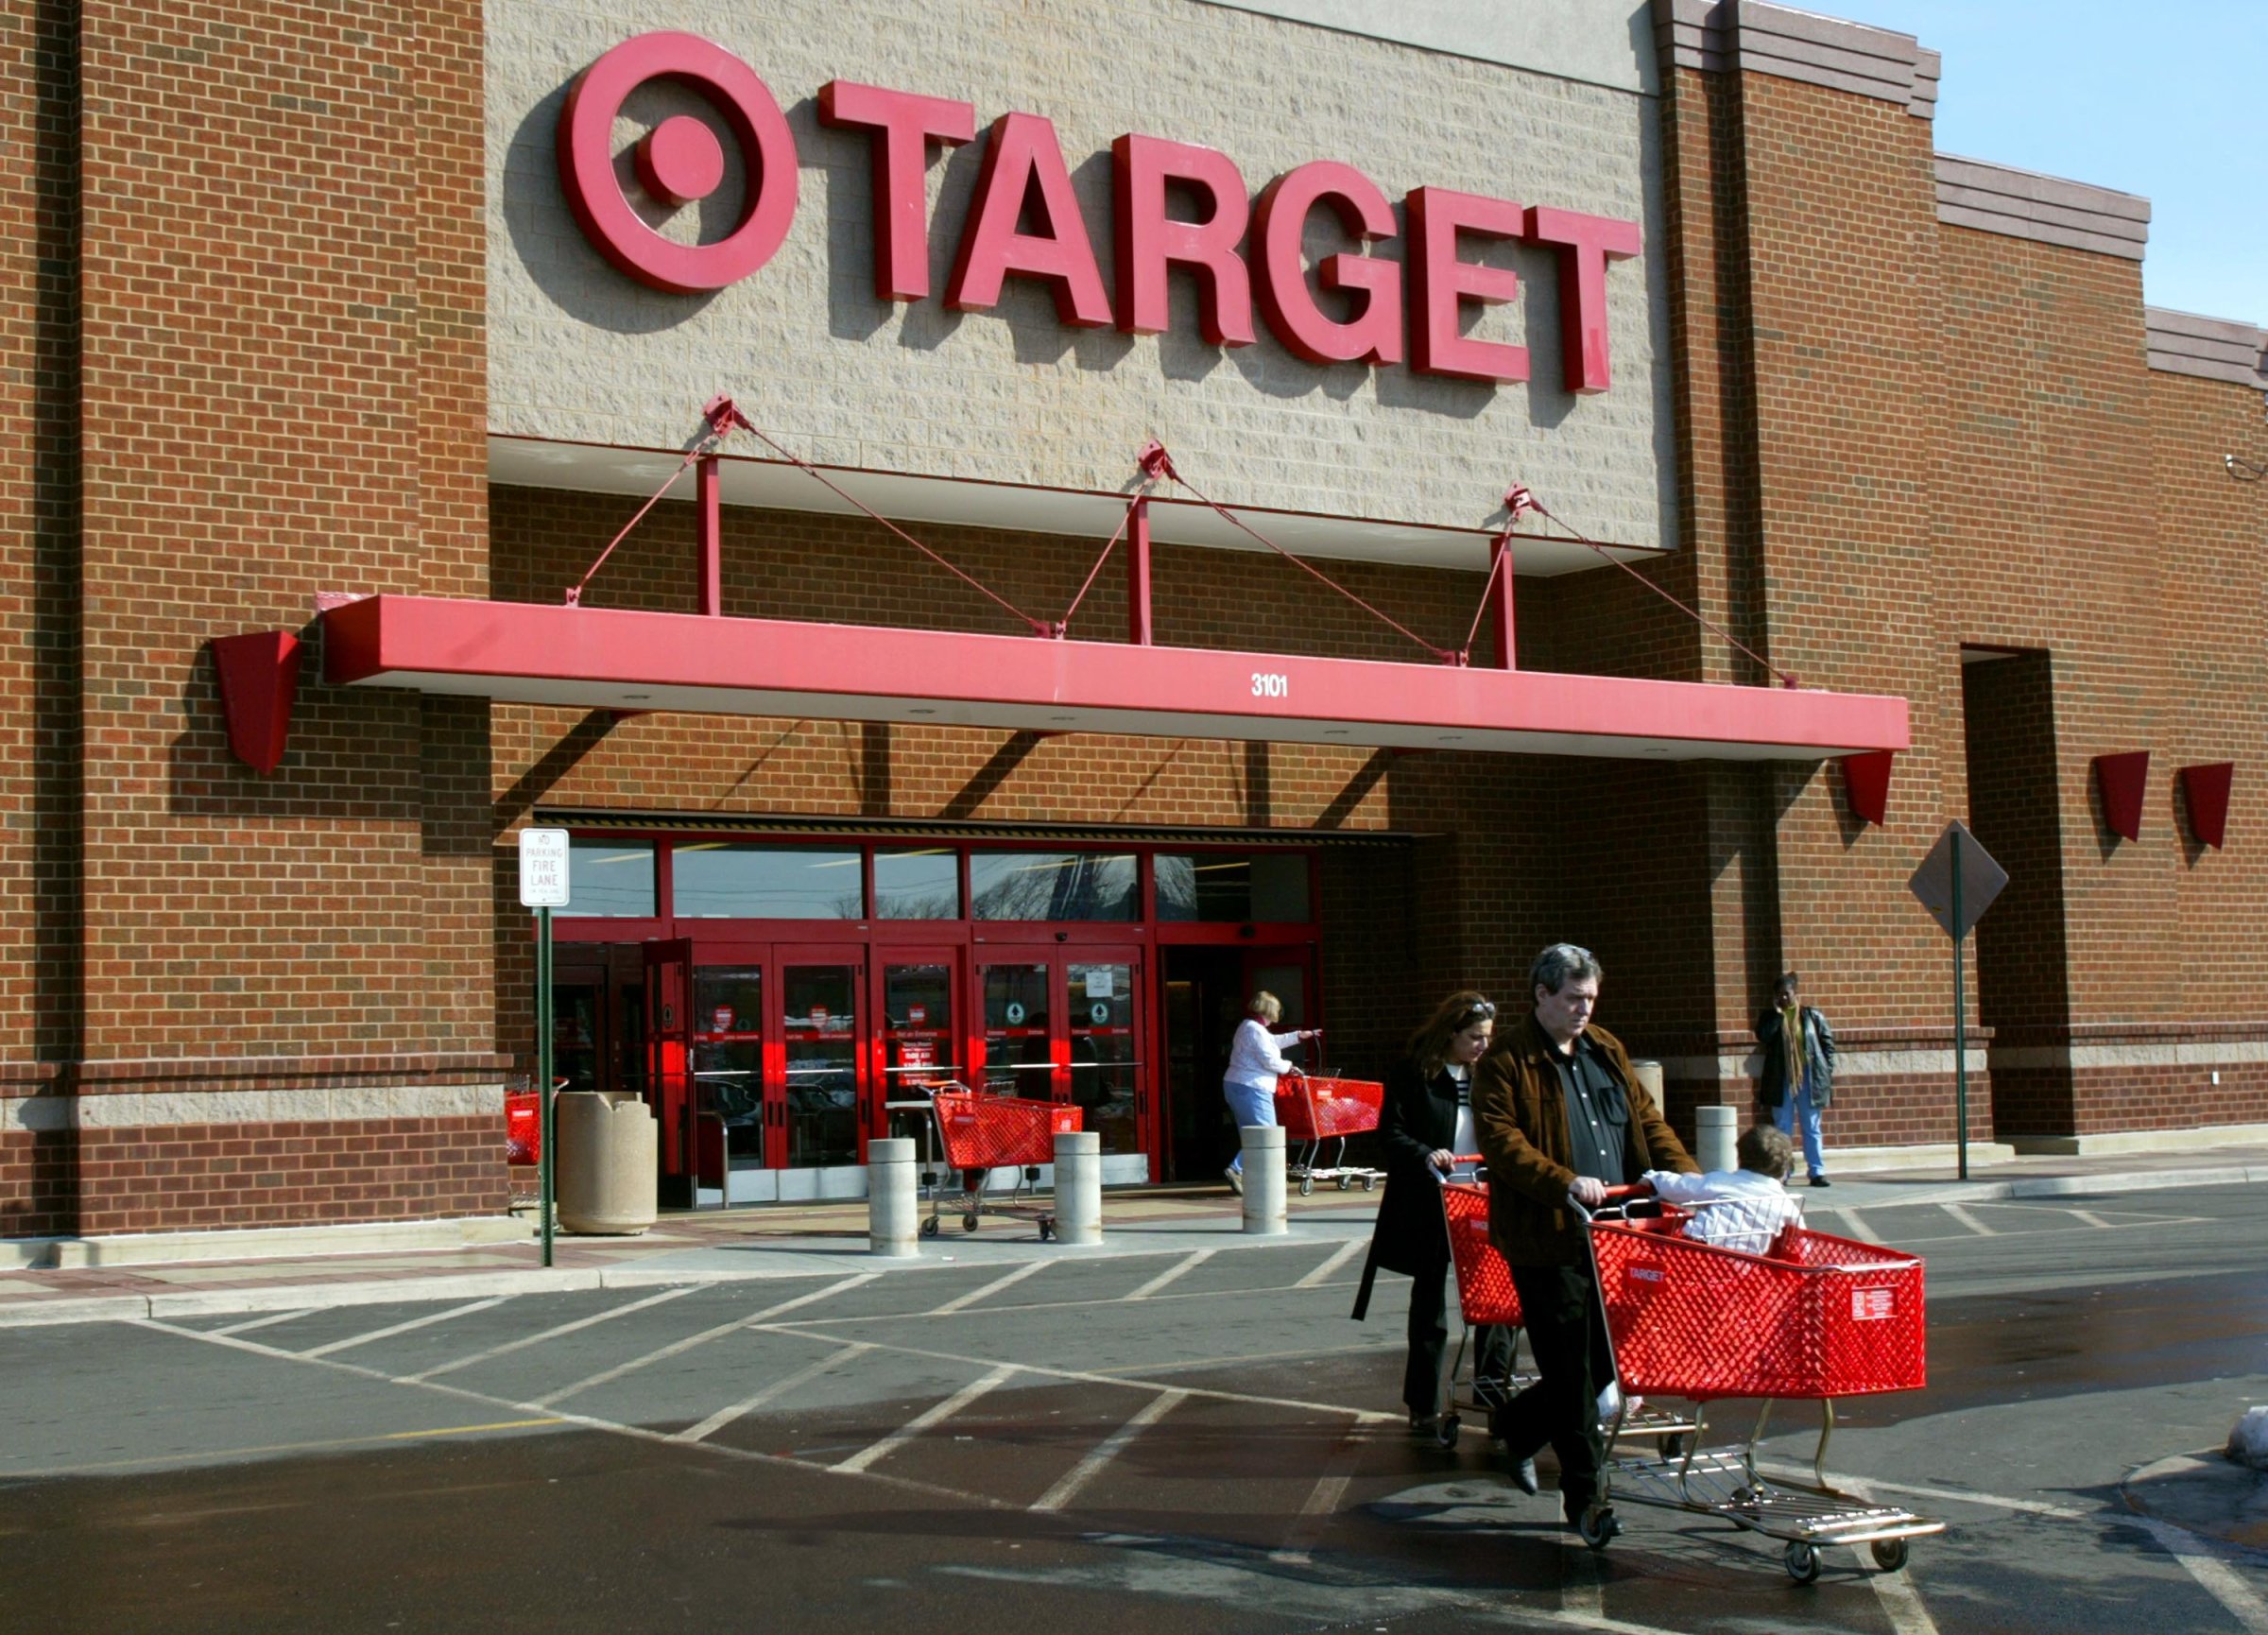 Target Profits Rise Slightly